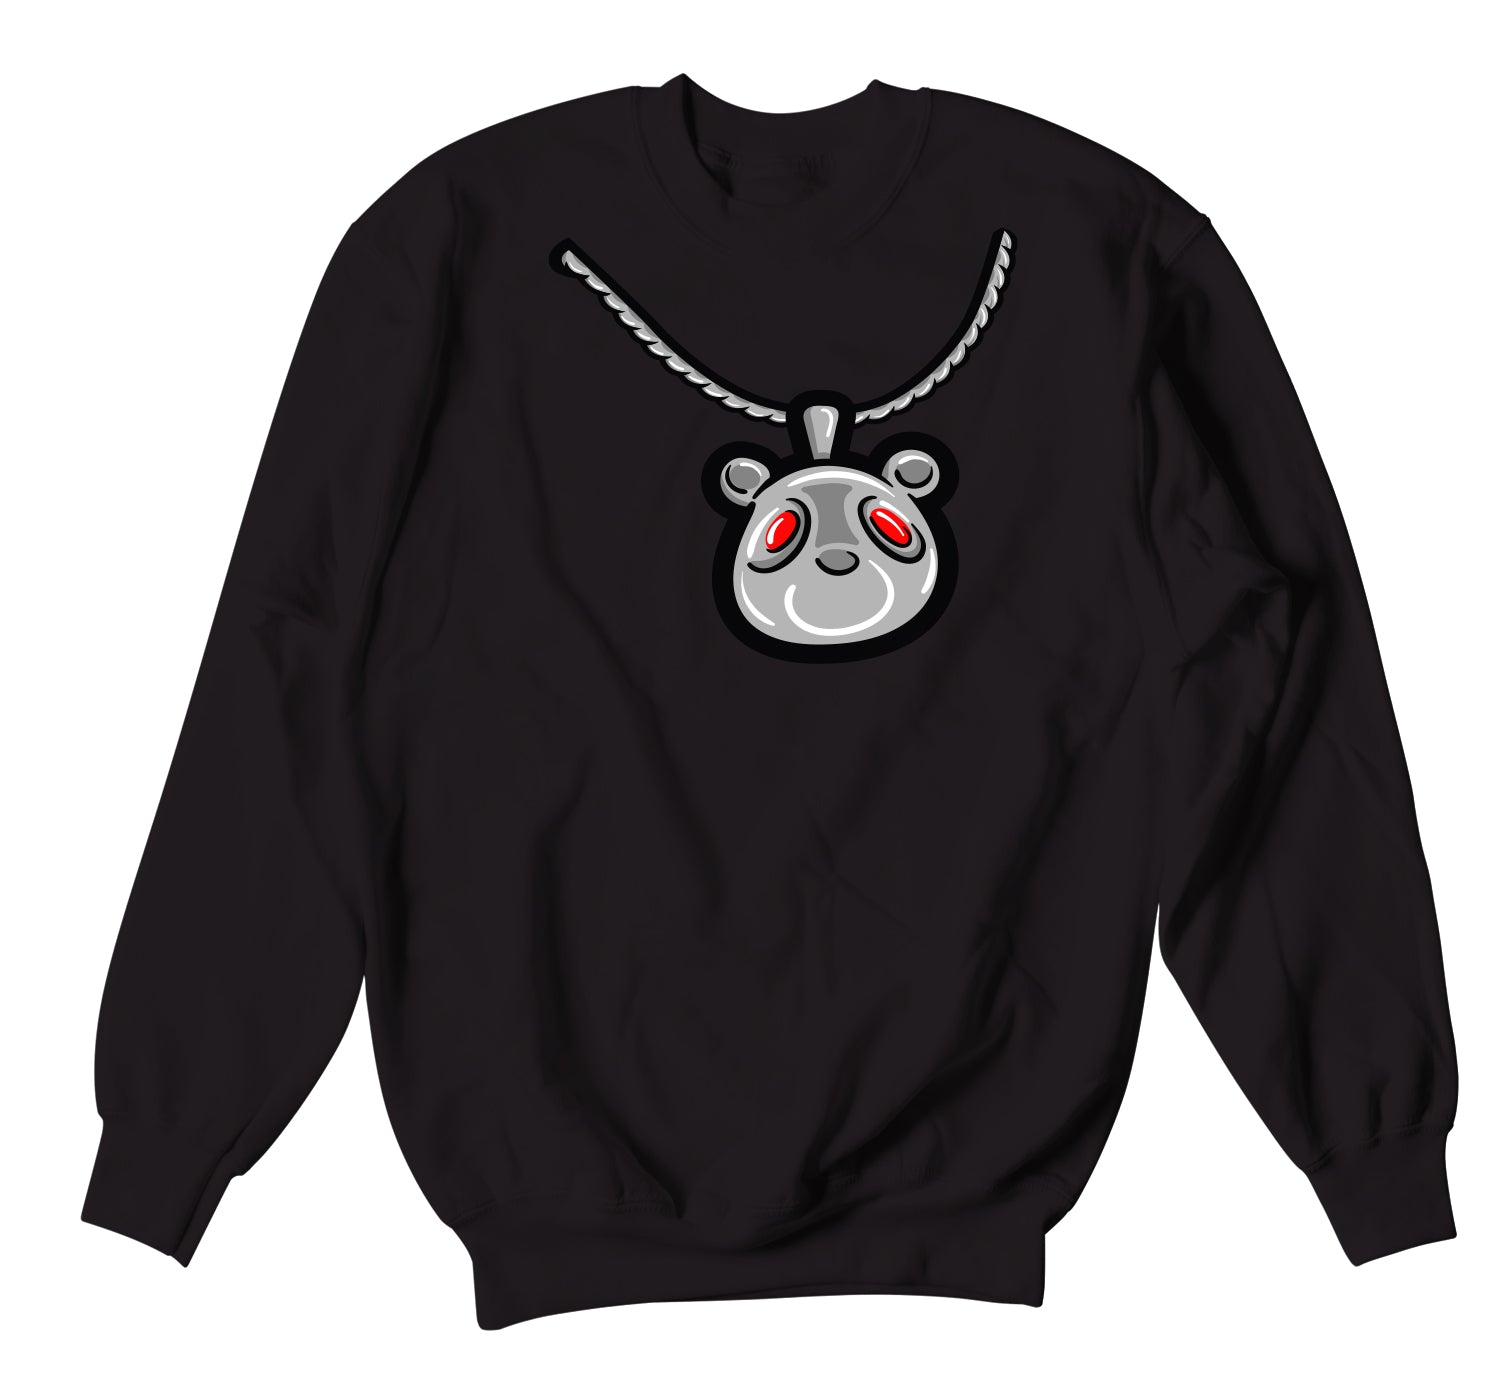 Bred 350 Sweater - Bear Charm - Black